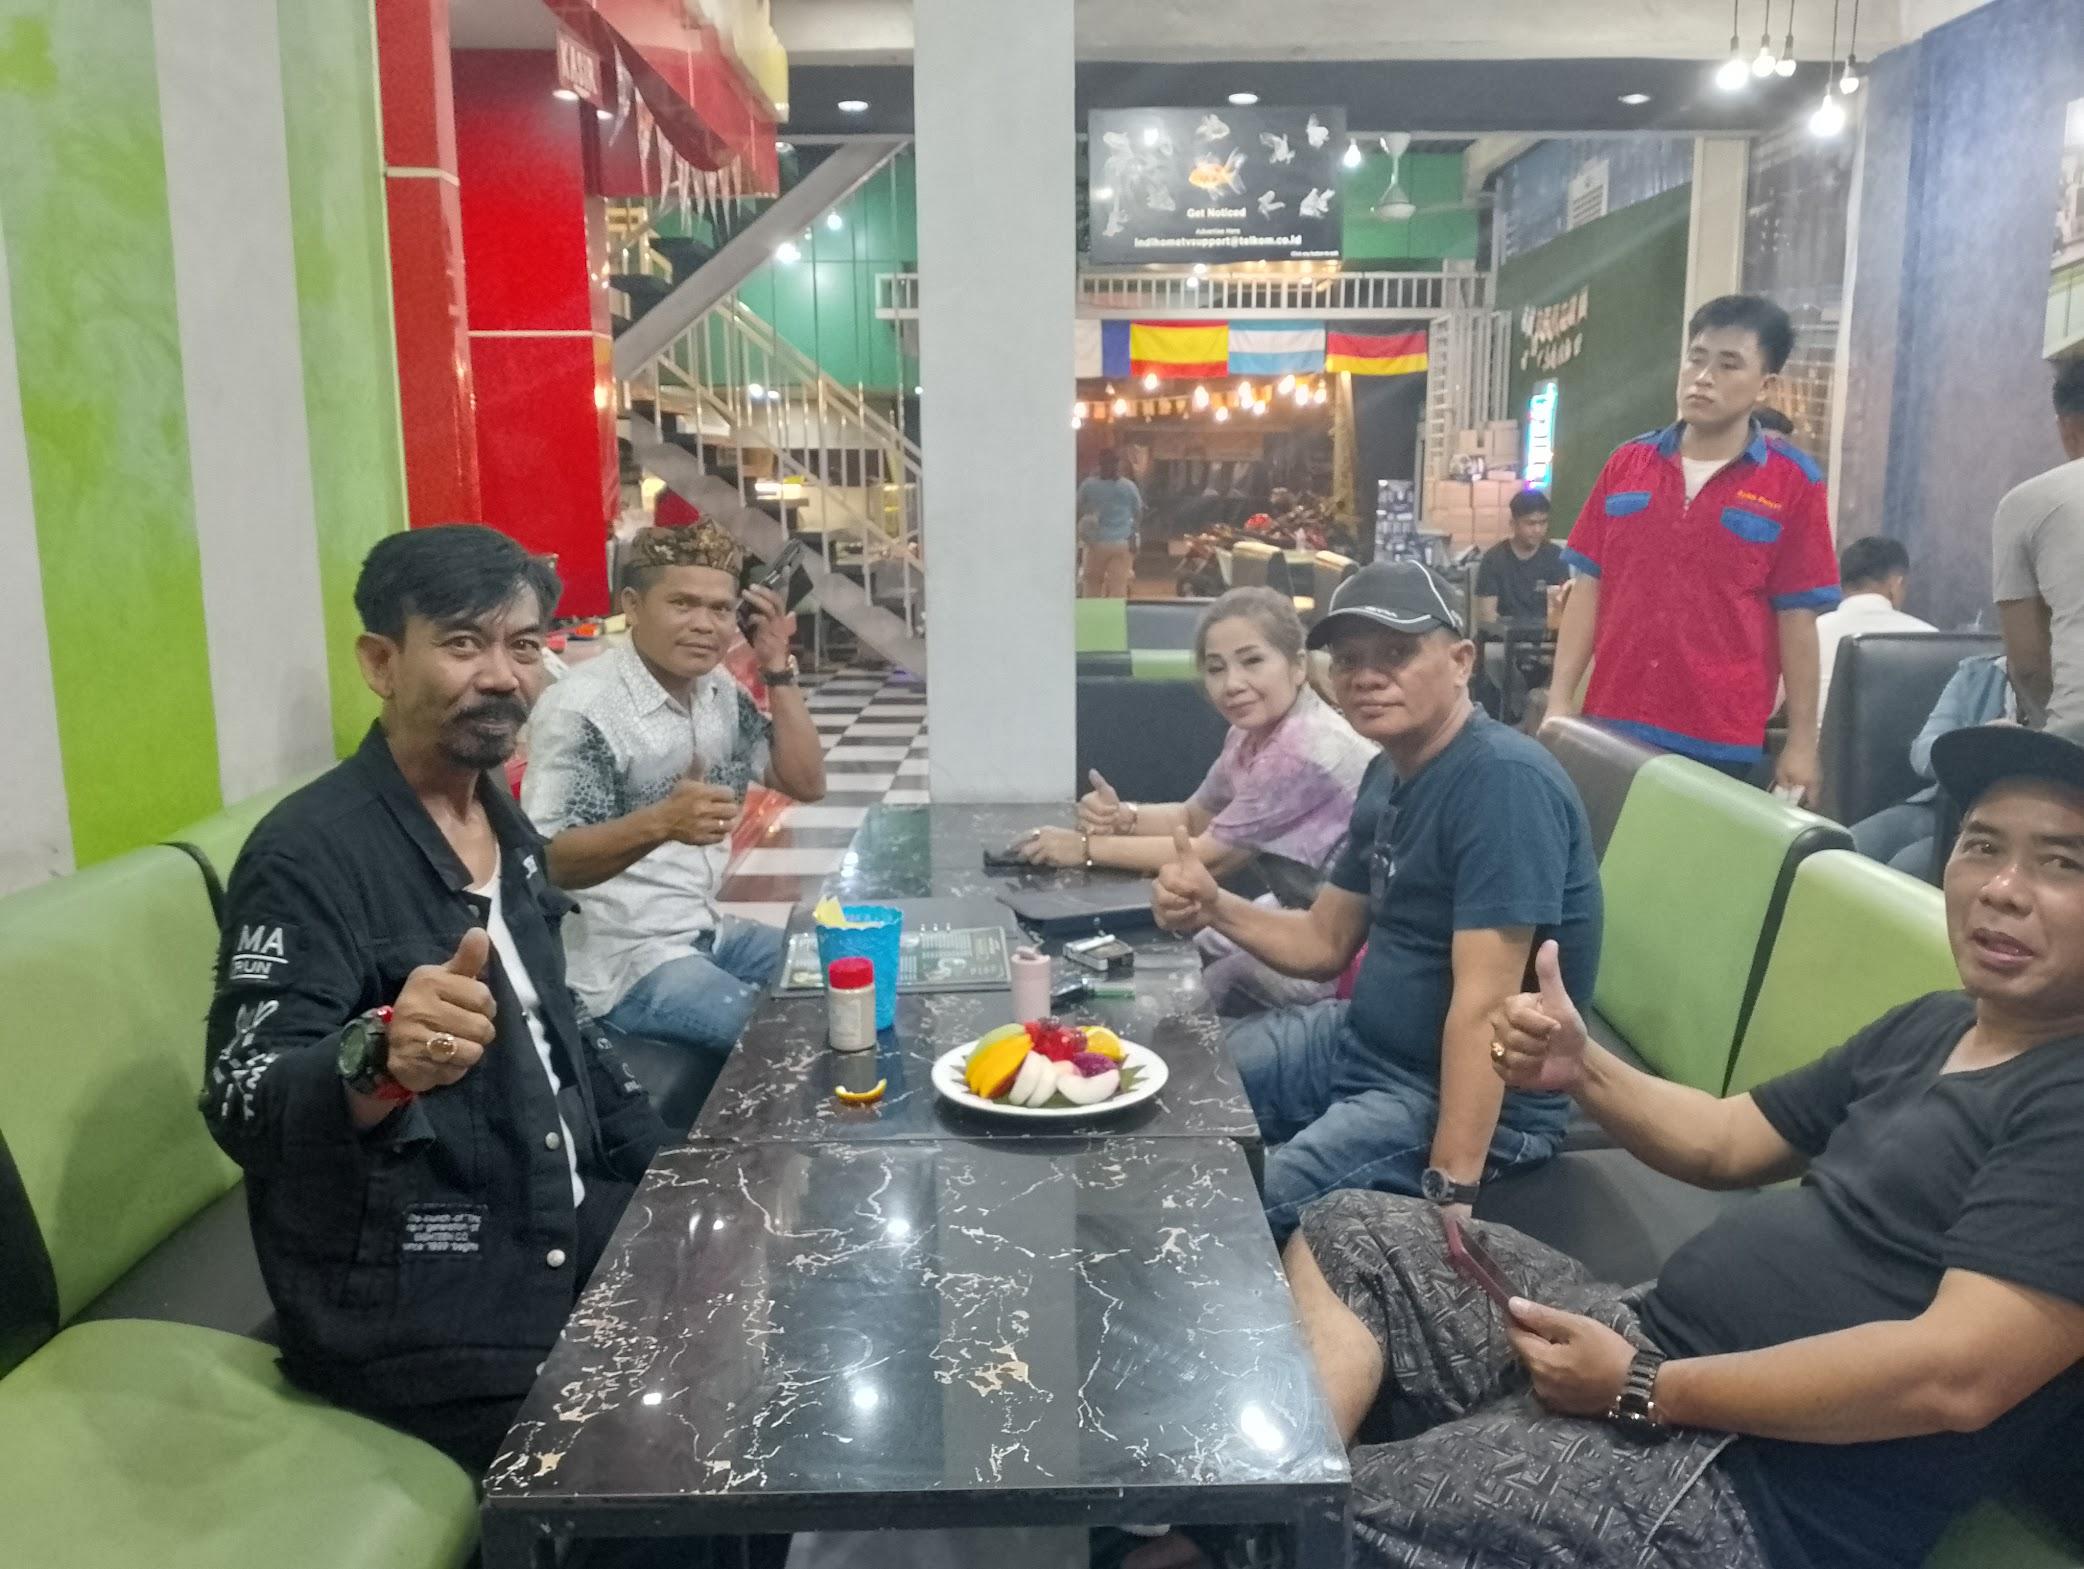 Ayam Penyet Jakarta review